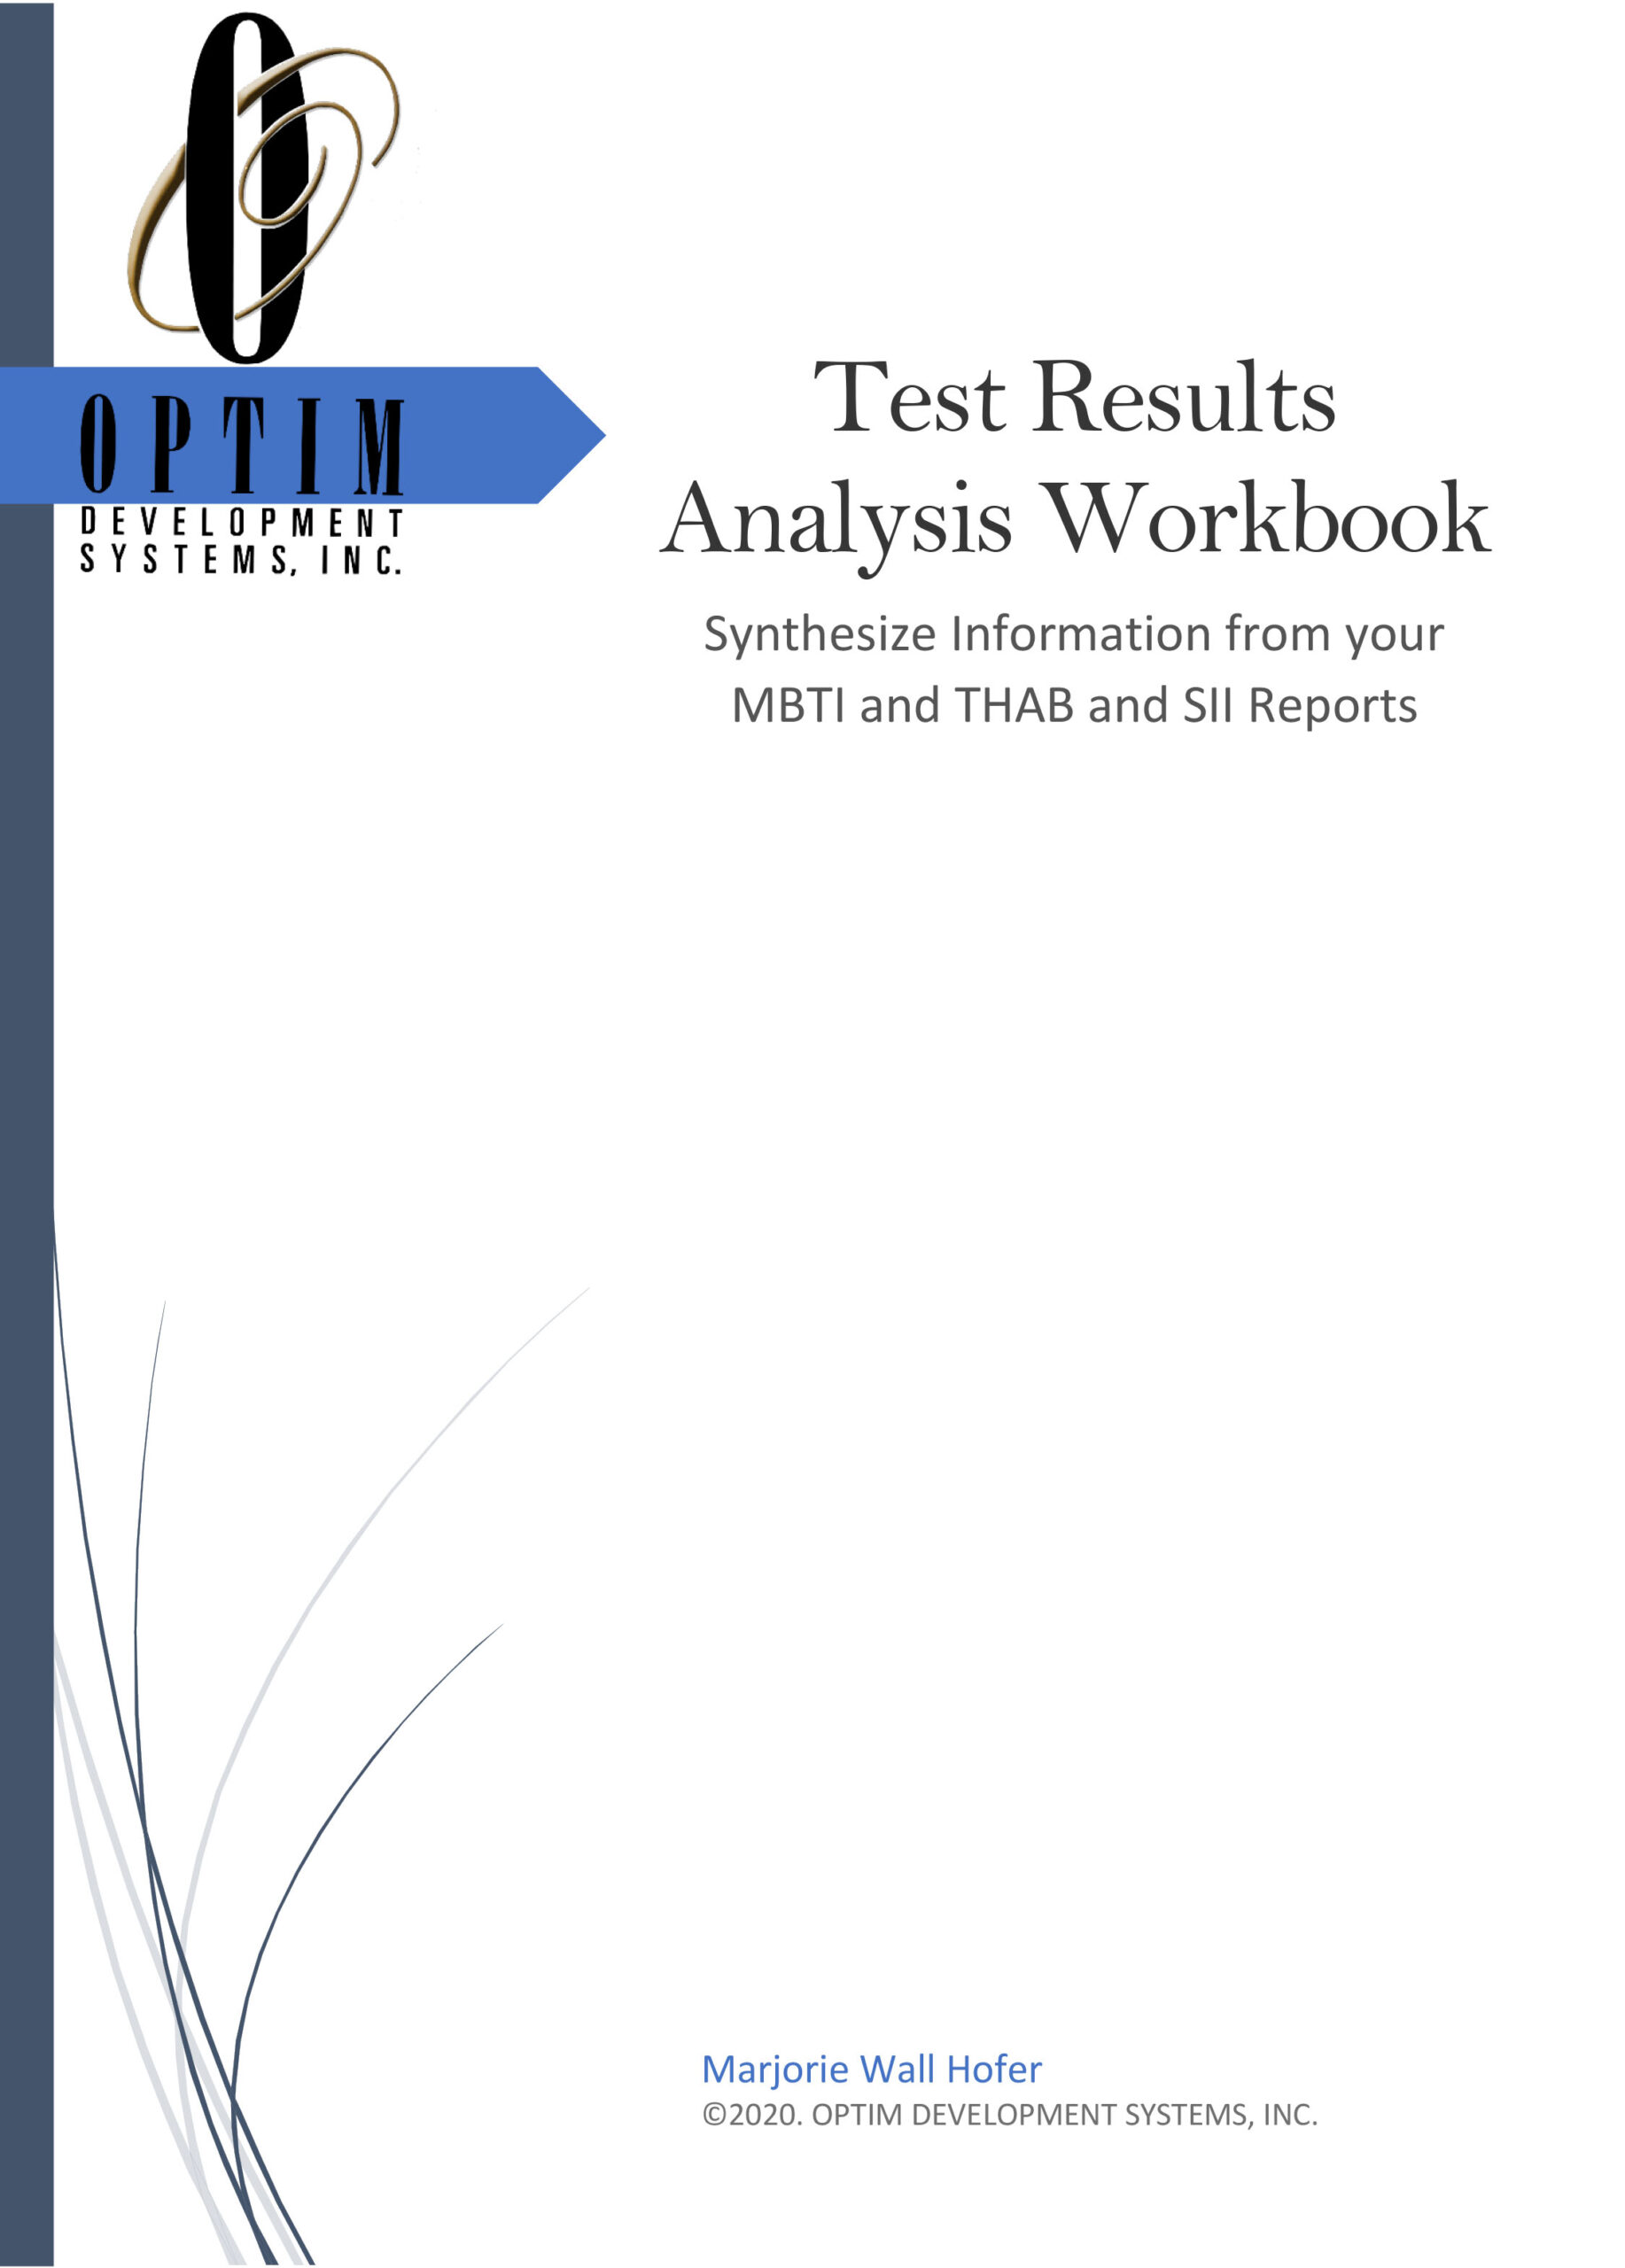 Career Test Analysis Workbook